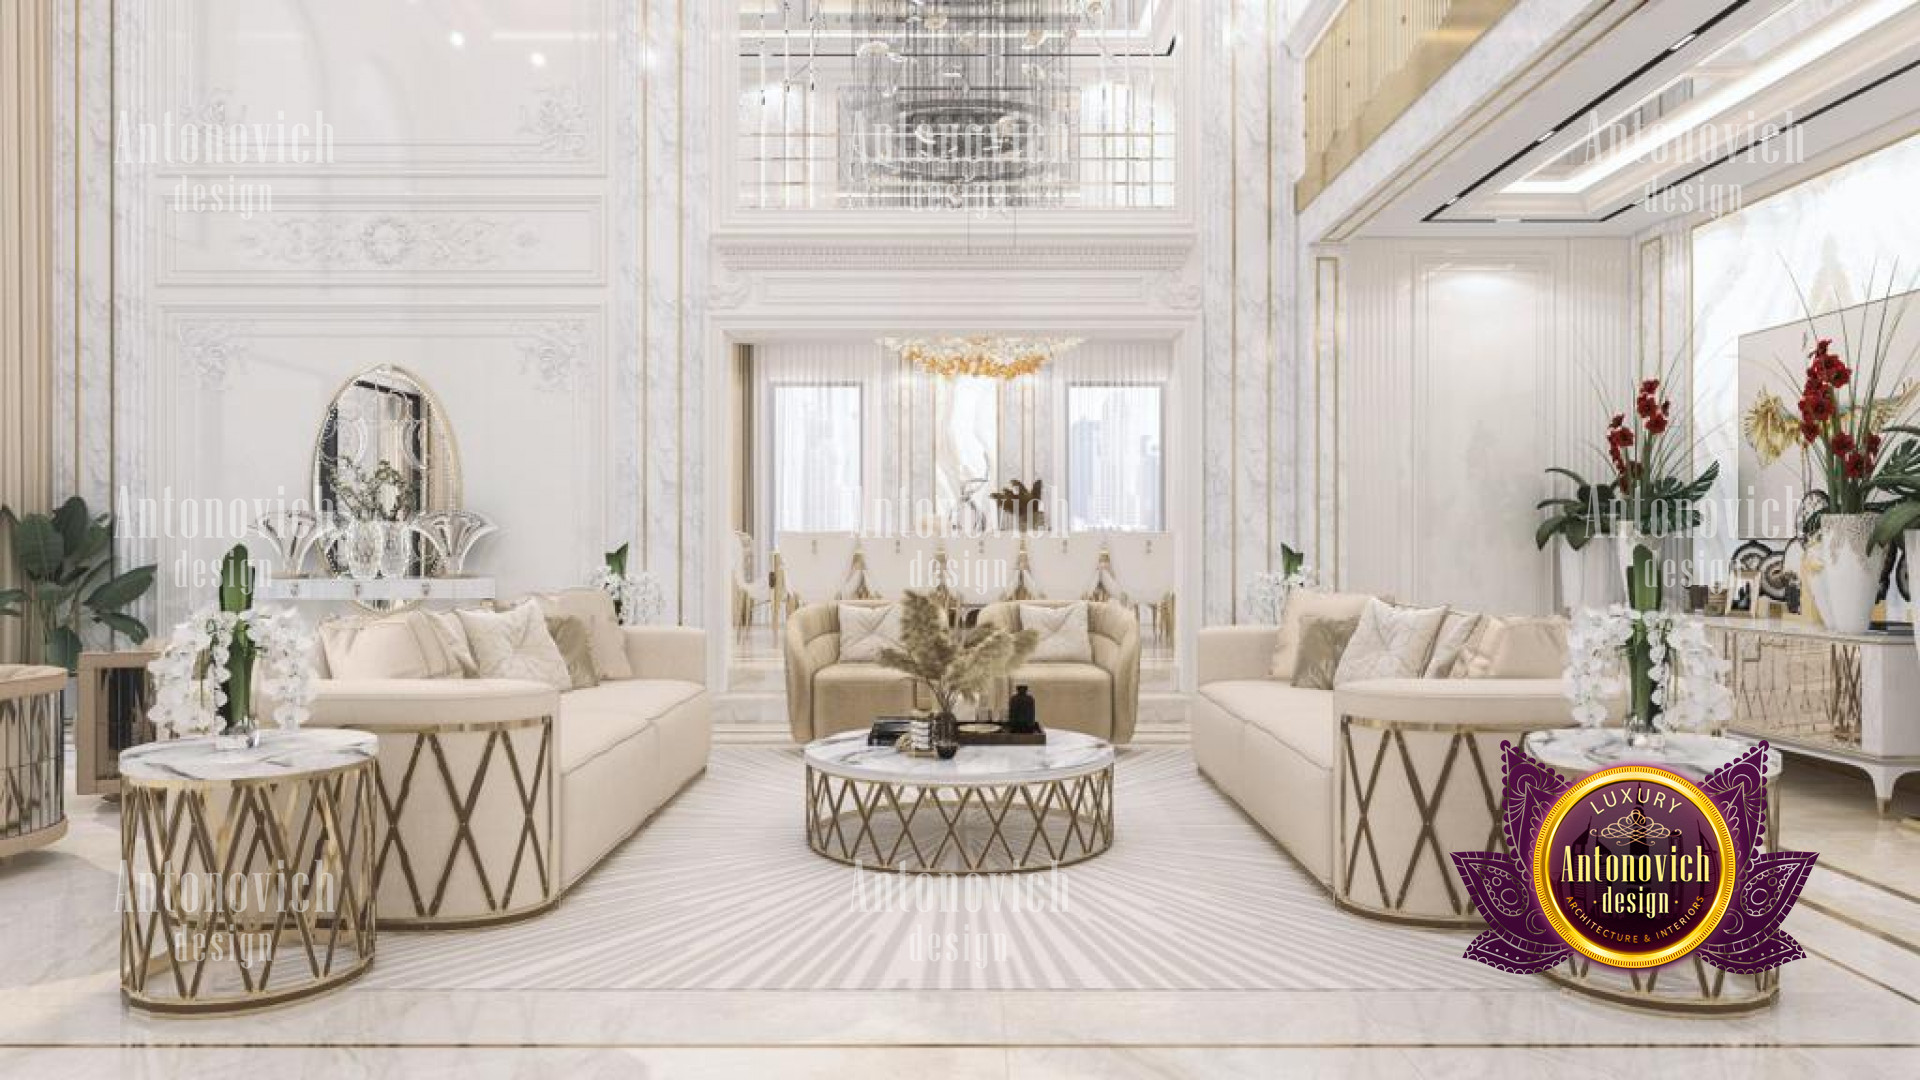 Luxurious Hall Interior Of 22 Carat Villa Design The Palm